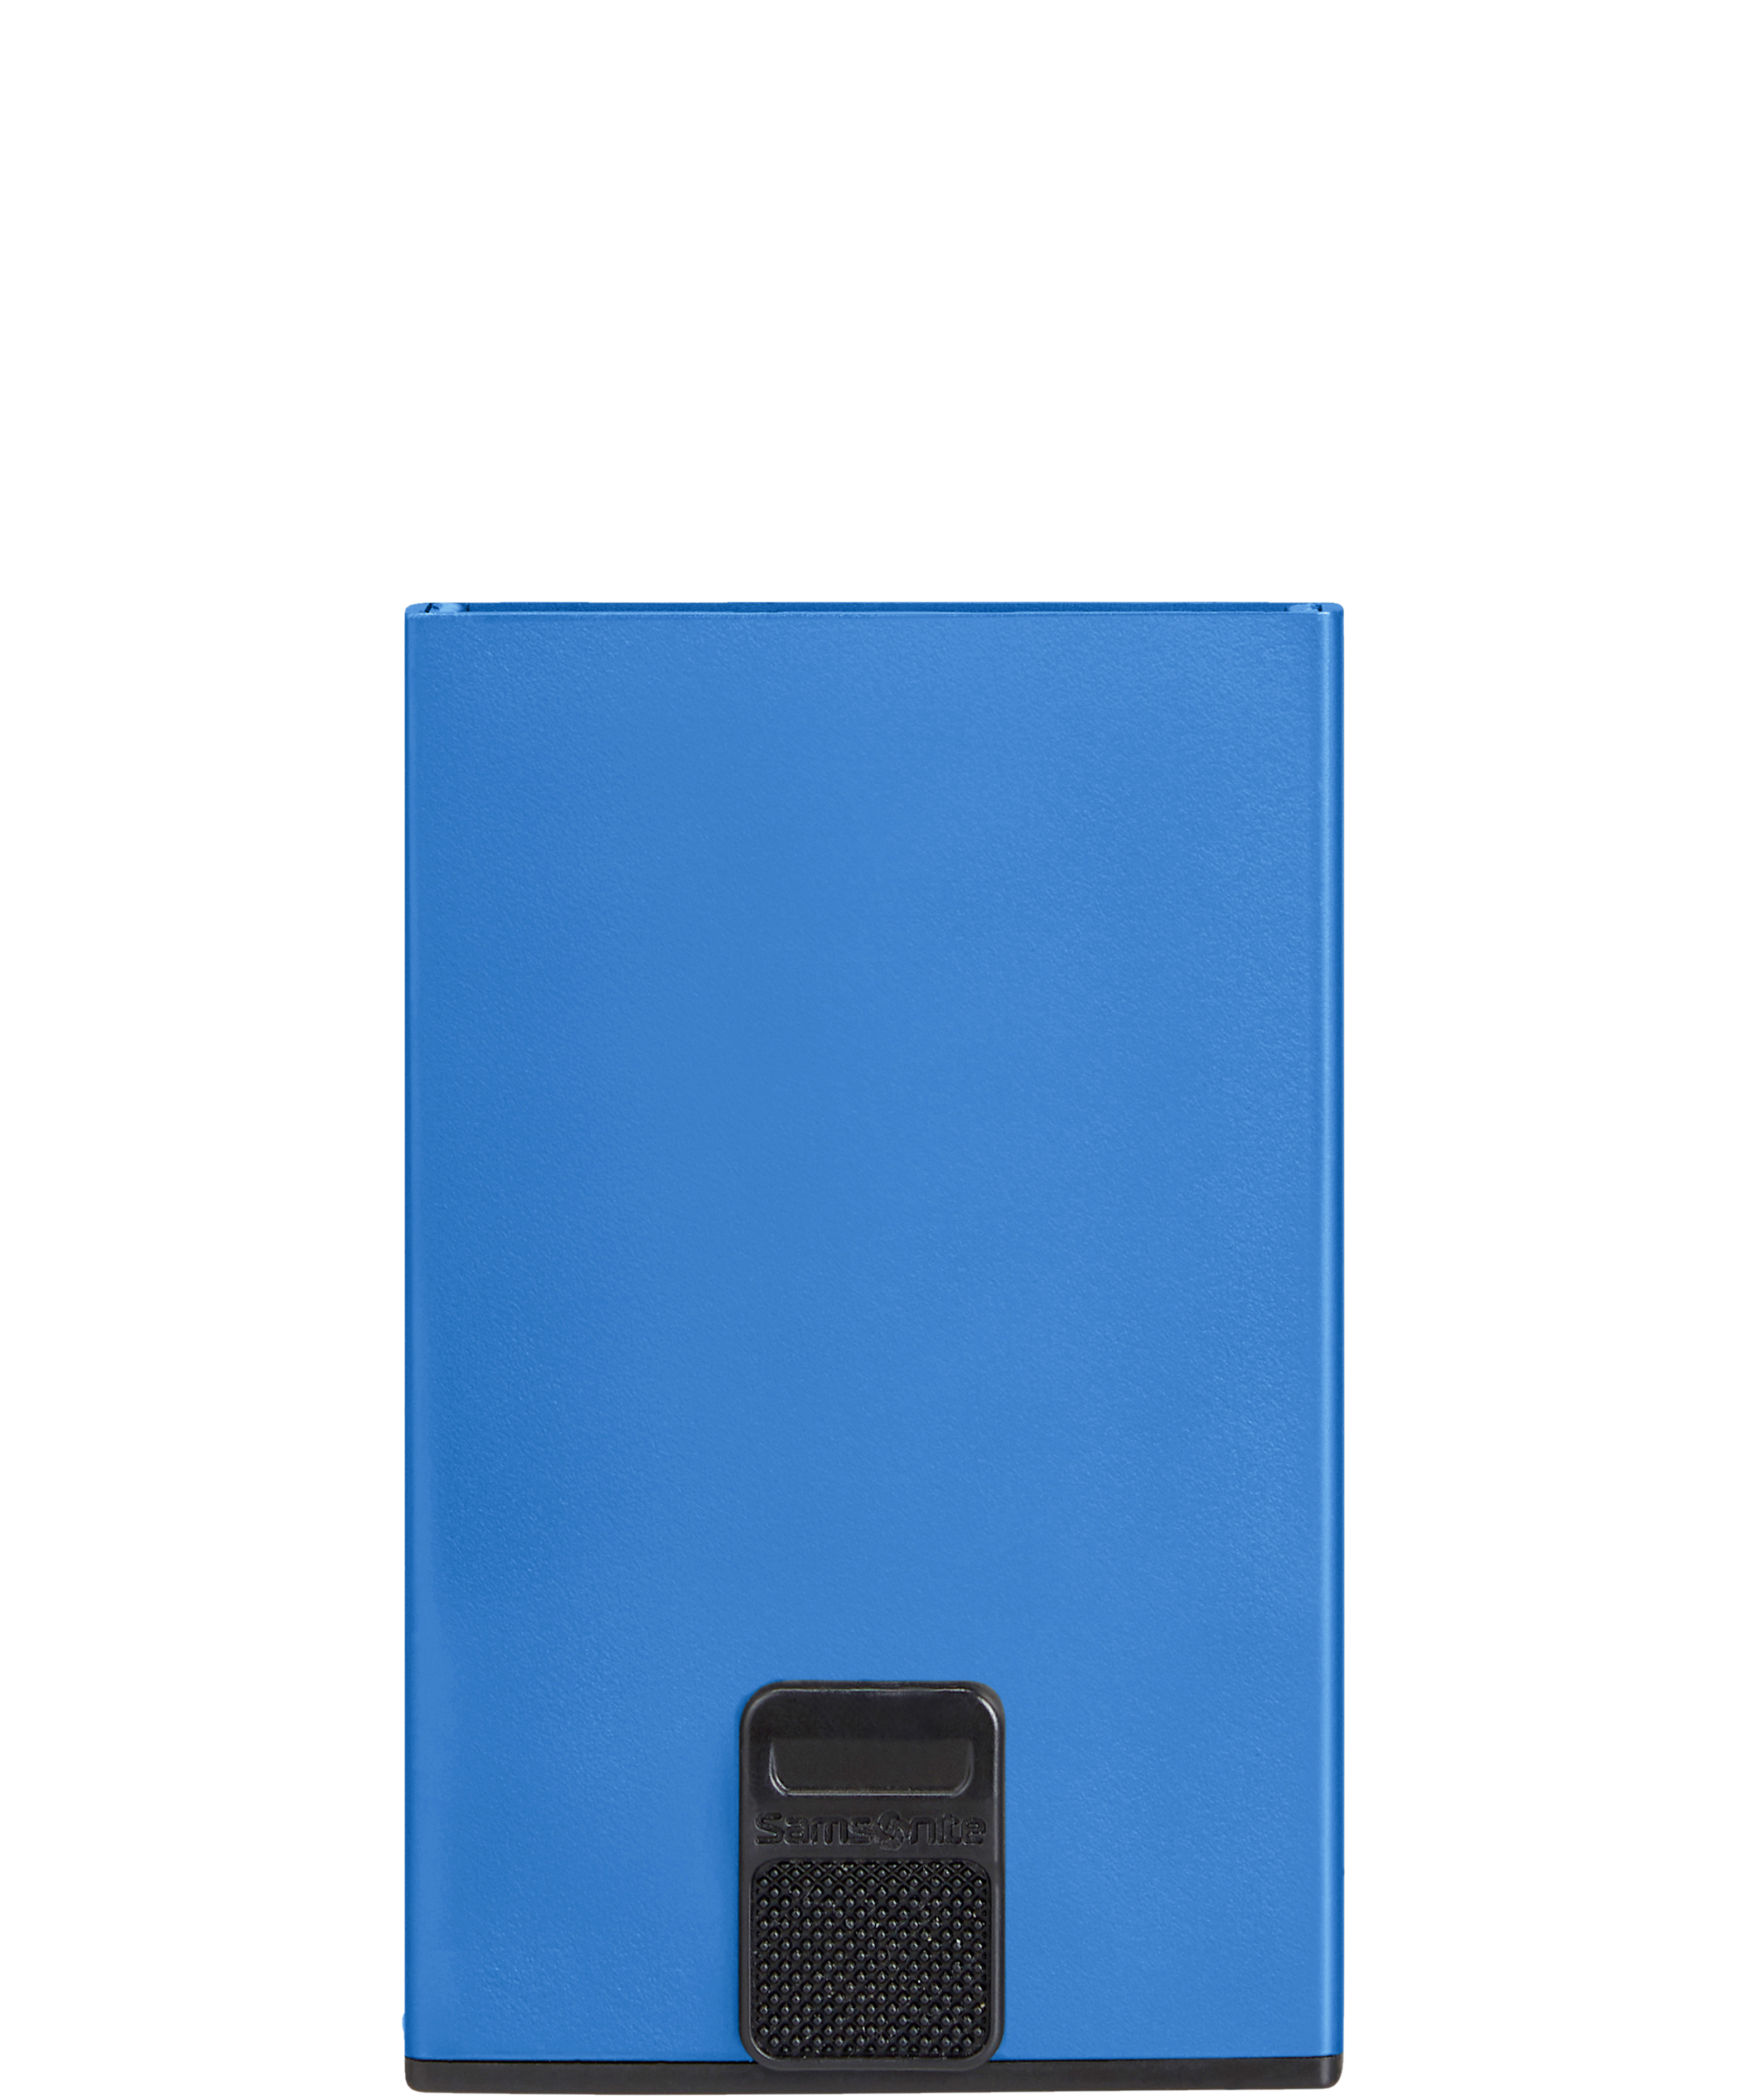 Samsonite Global Travel Accessories Microbead Cuscino da viaggio 32 centimeters 1 Midnight Blue Blu